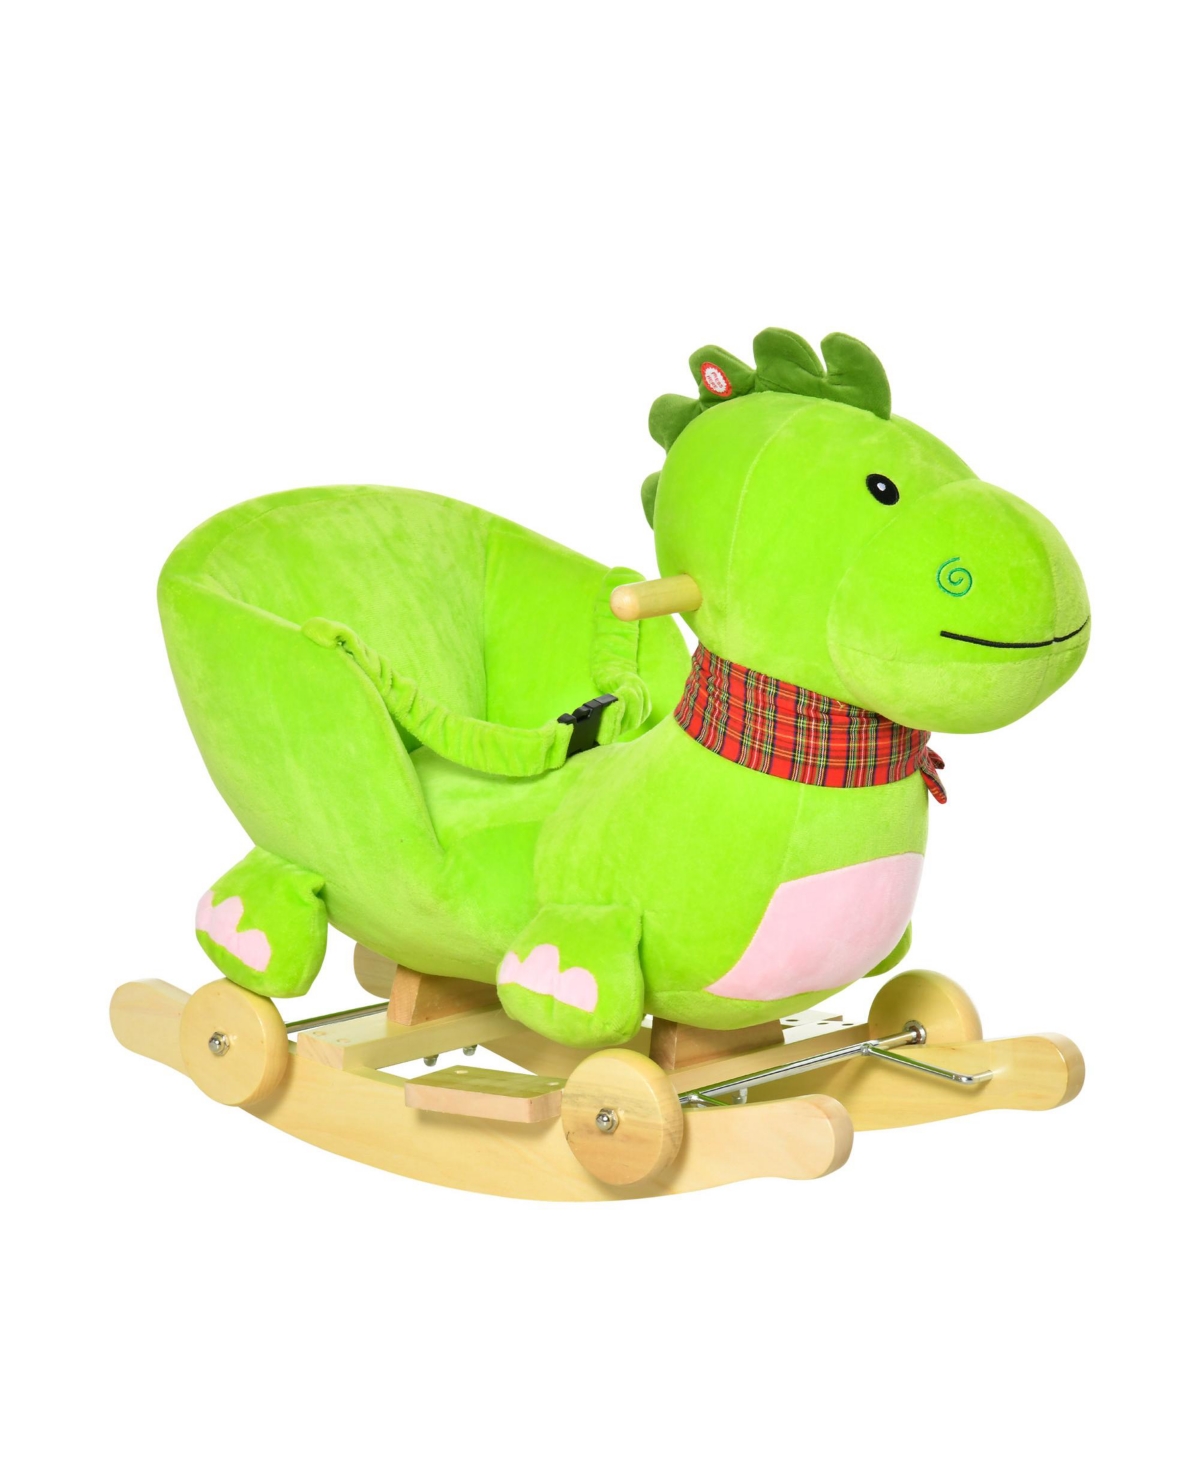 Qaba Babies' 2-in-1 Kid Ride On Rolling Rocking Rider Wheeled Plush Dinosaur Toy In Green